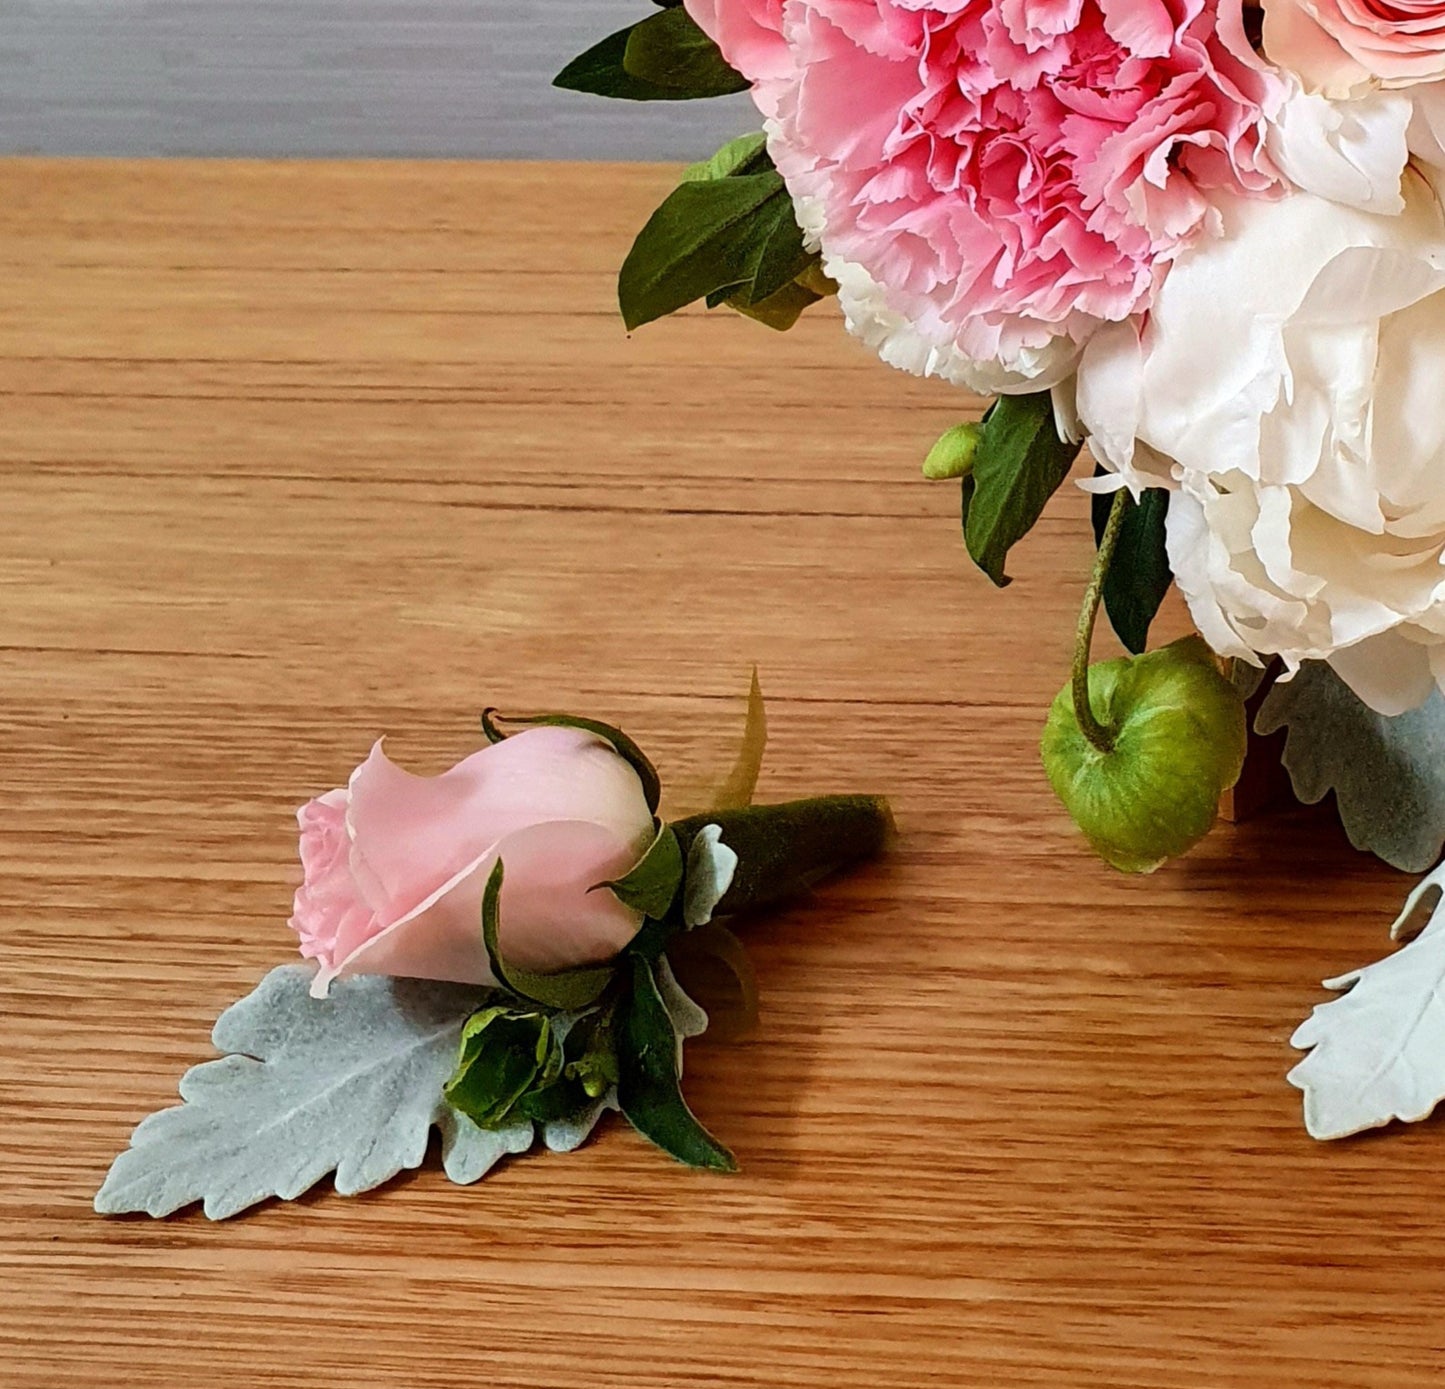 Pastel - Wedding Bouquet and Buttonhole